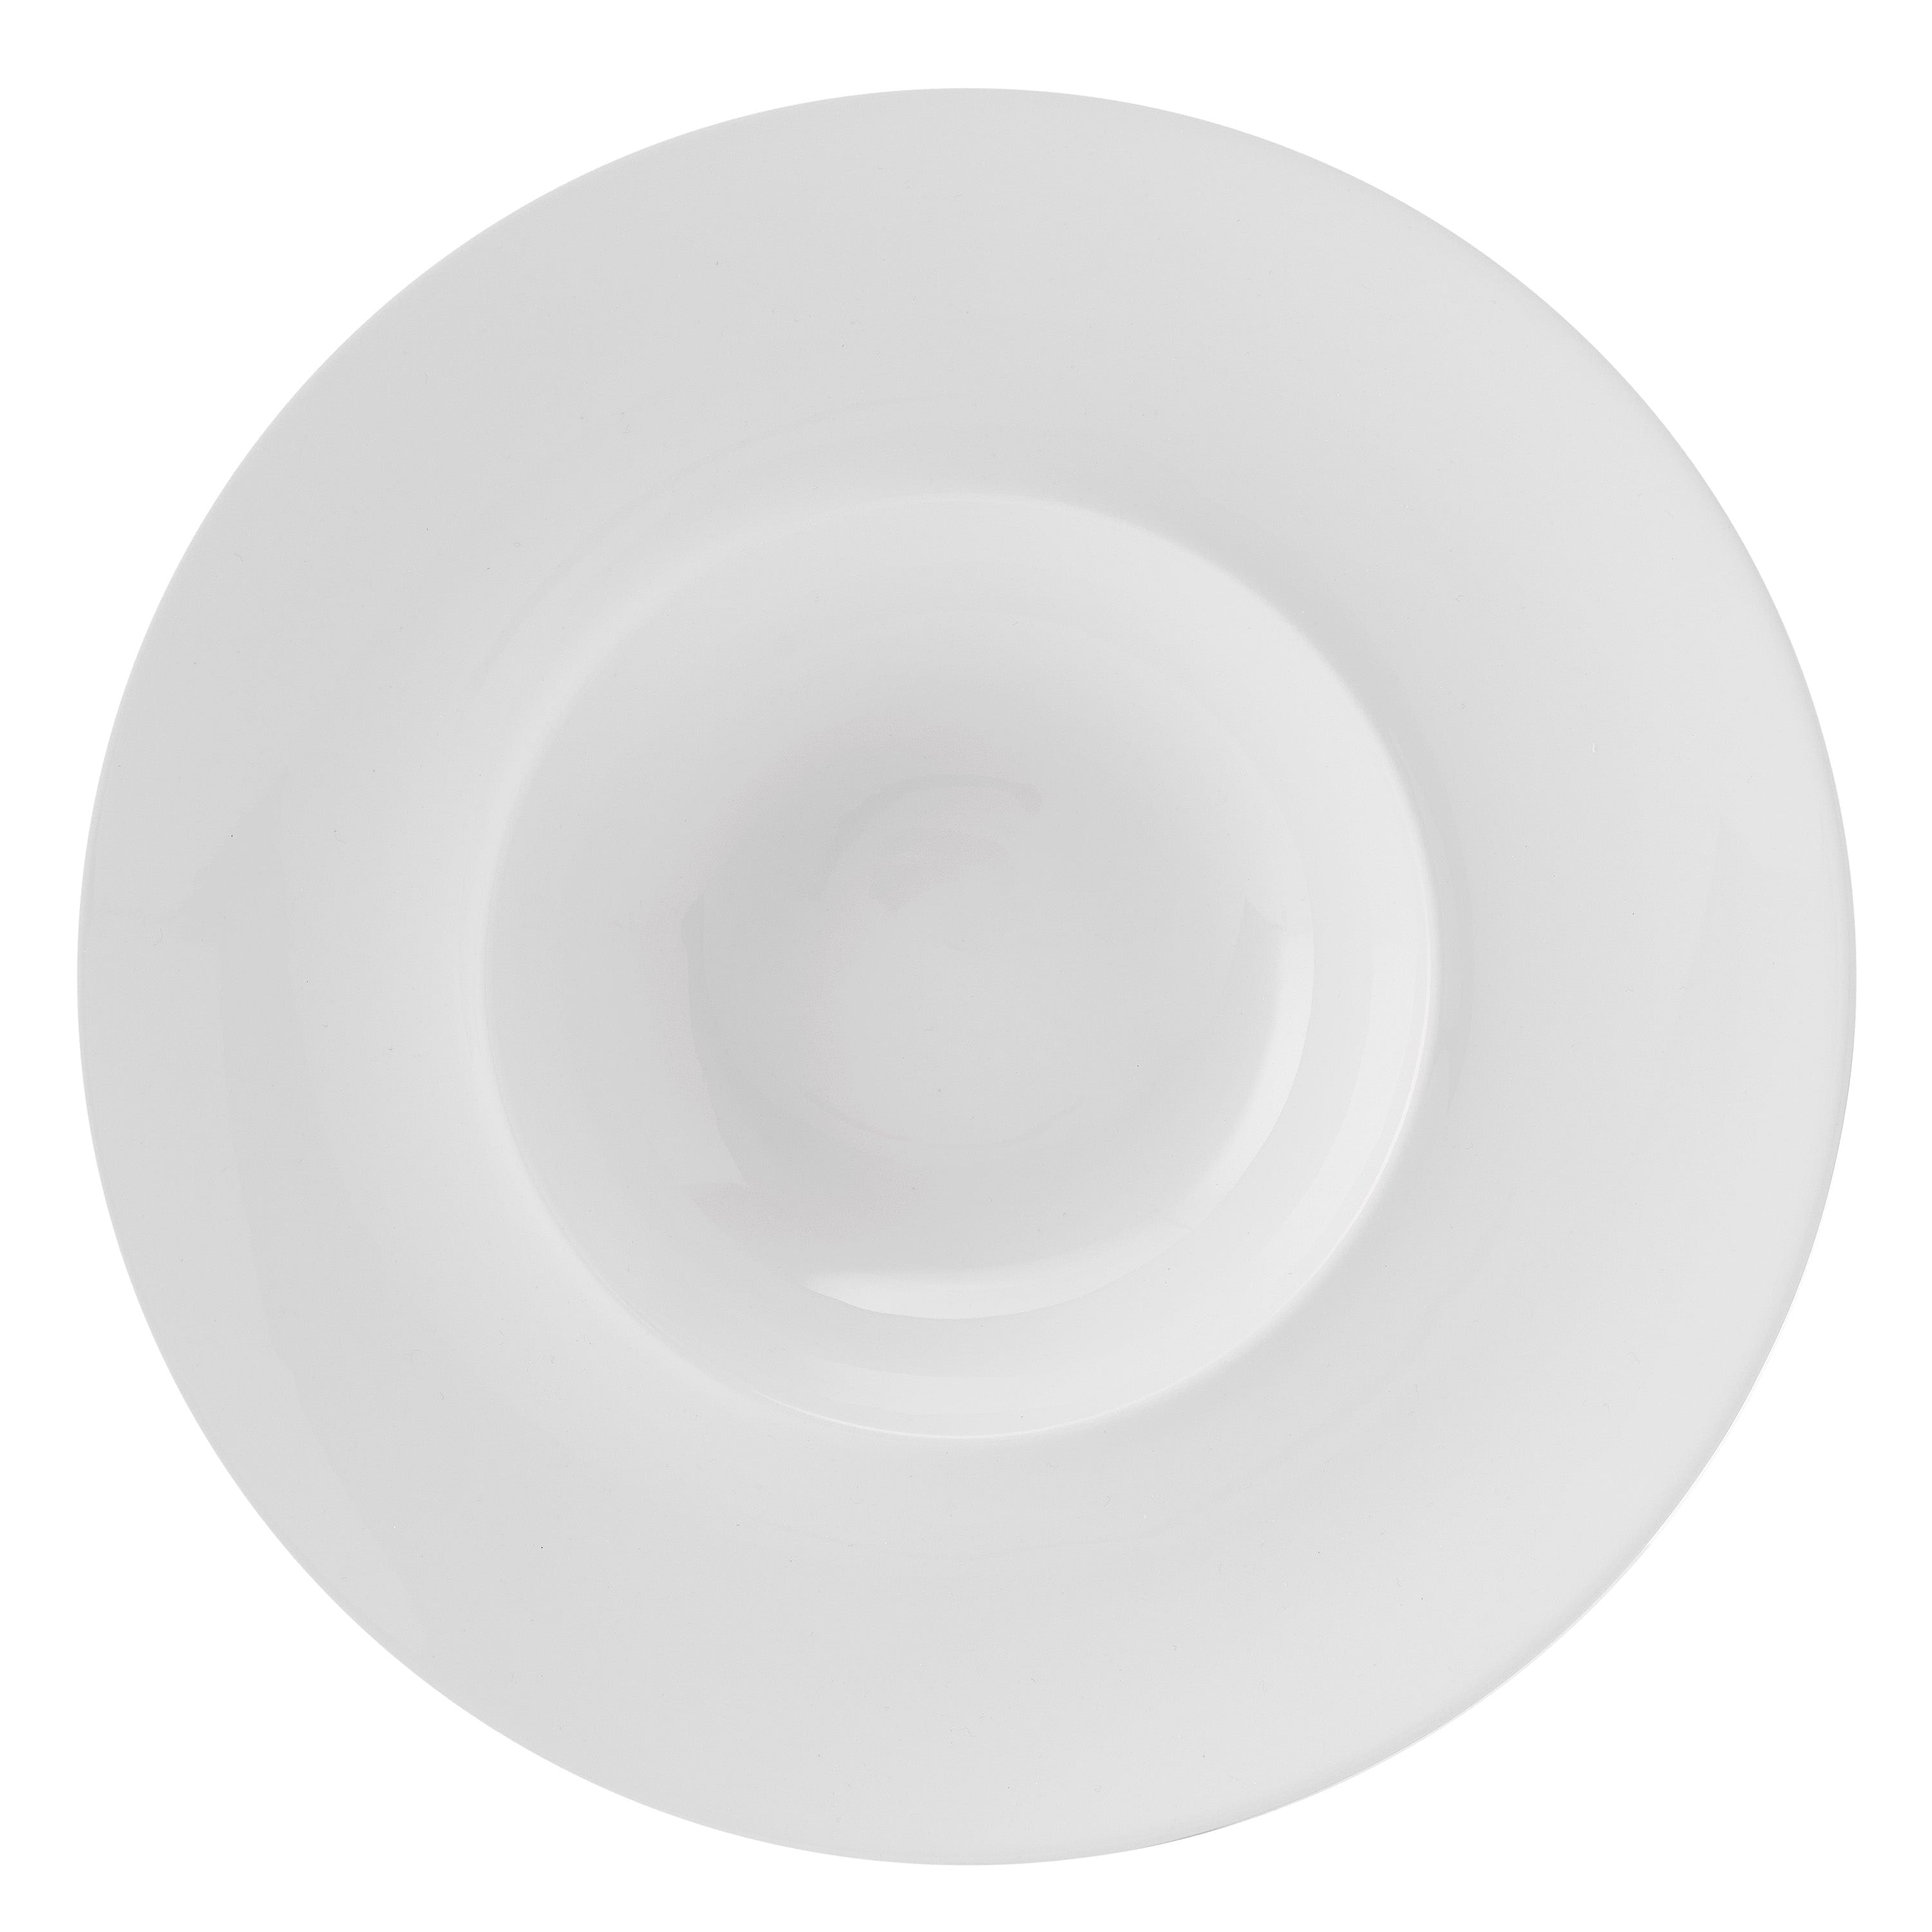 Specials Porcelain Deep Round Plate 11" White